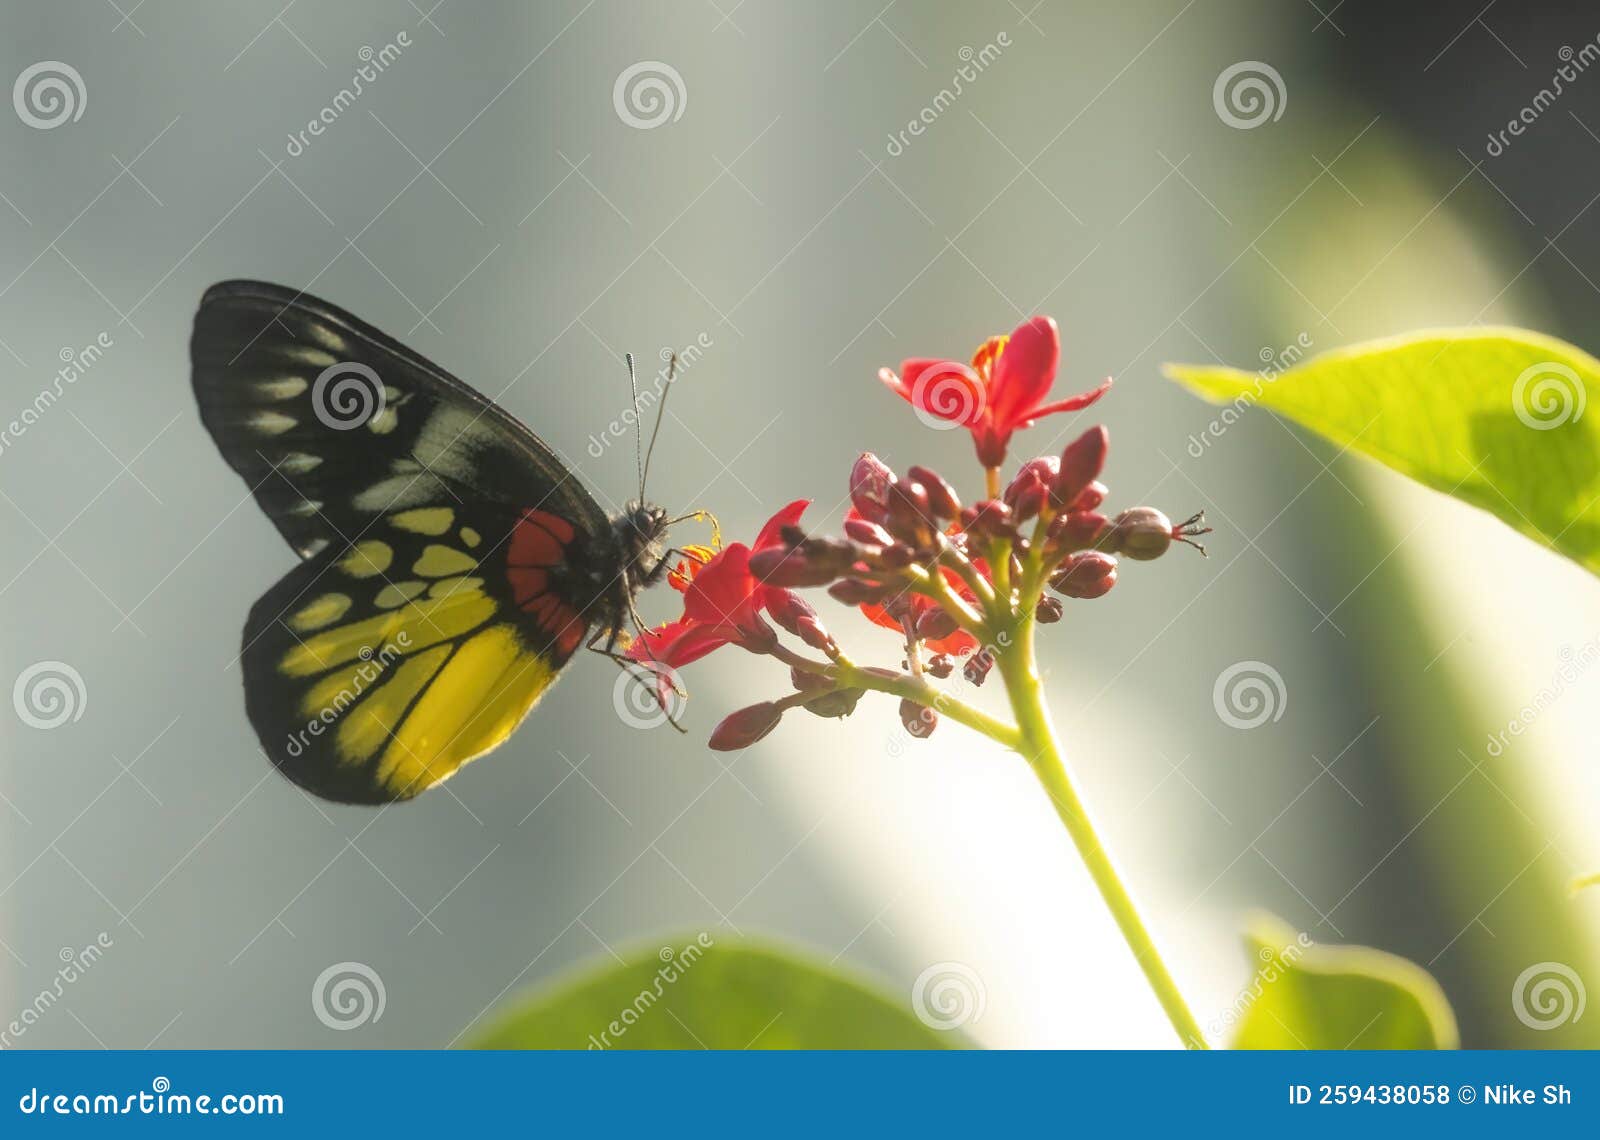 painted jezebel butterfly on a flower